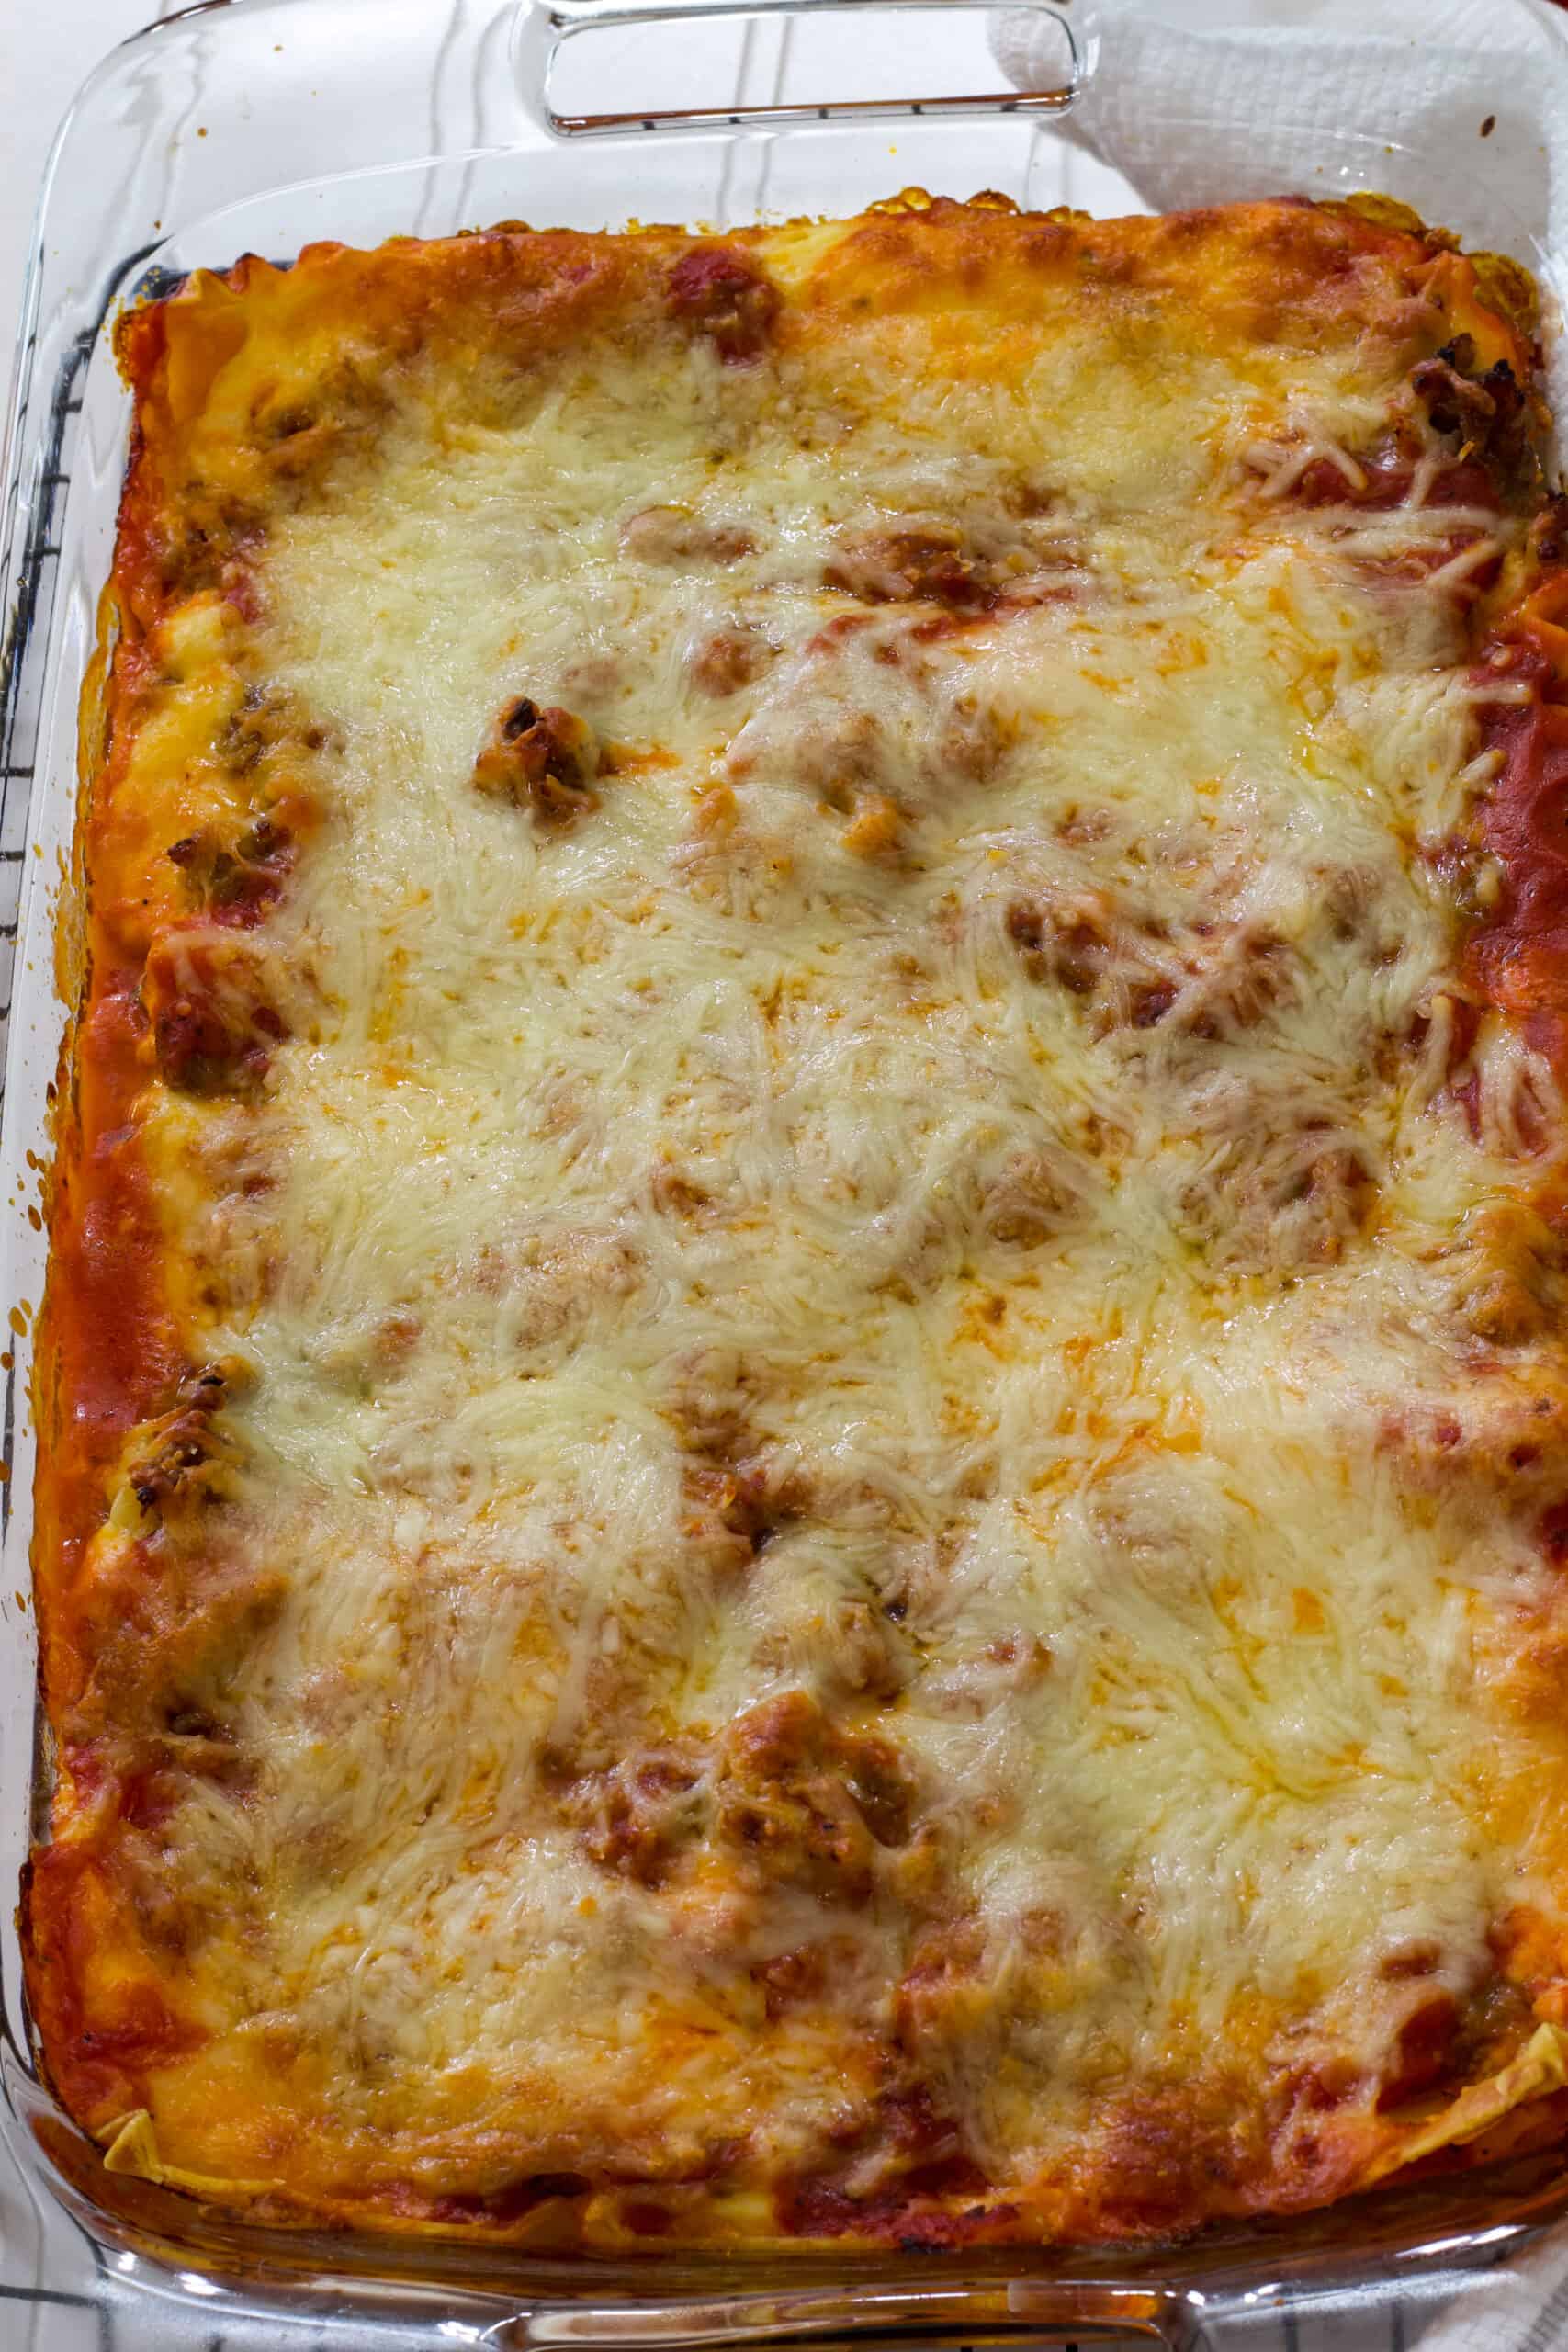 Vertical shot of the entire uncut casserole dish full of classico lasagna.